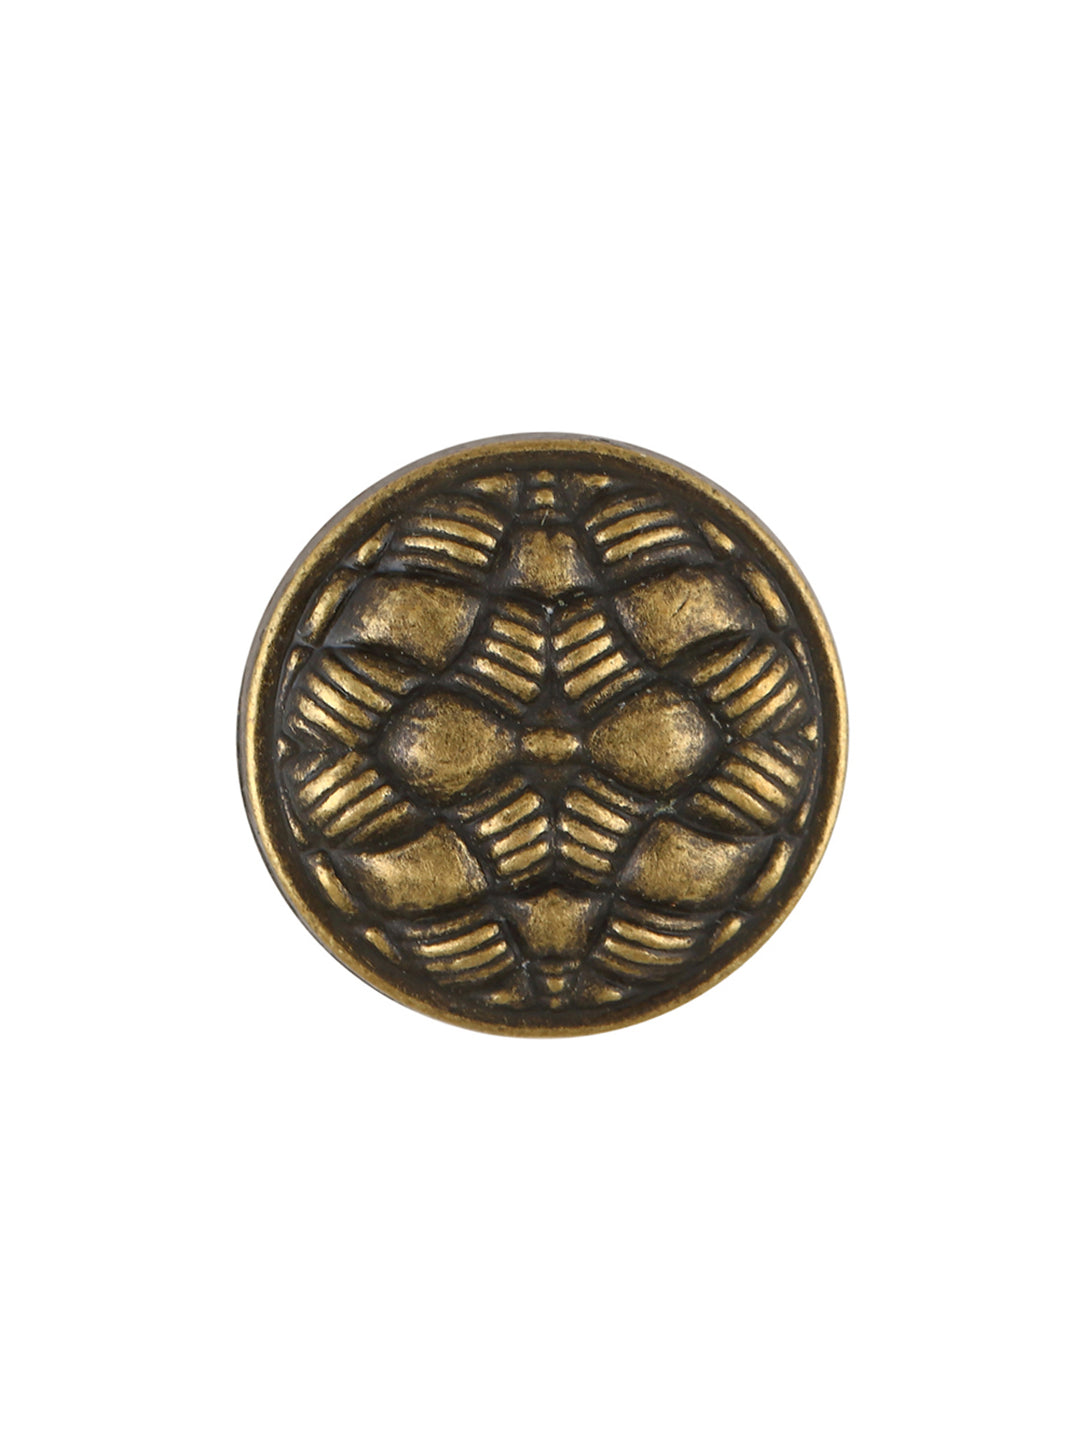 Fancy Designer Antique Looking Ethnic Button in Antique Brass Color